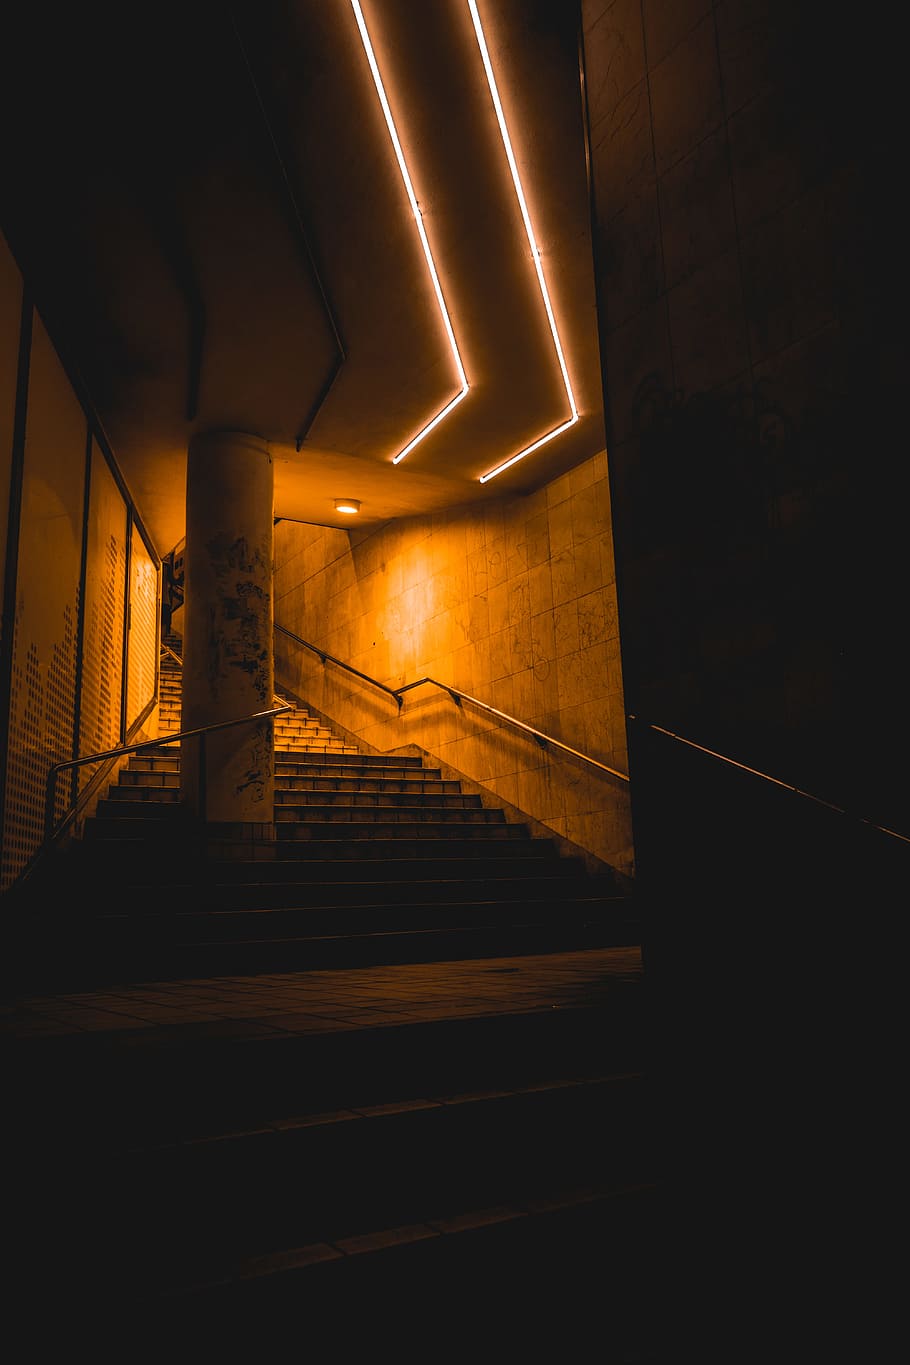 A staircase with neon lights underneath it - Dark orange